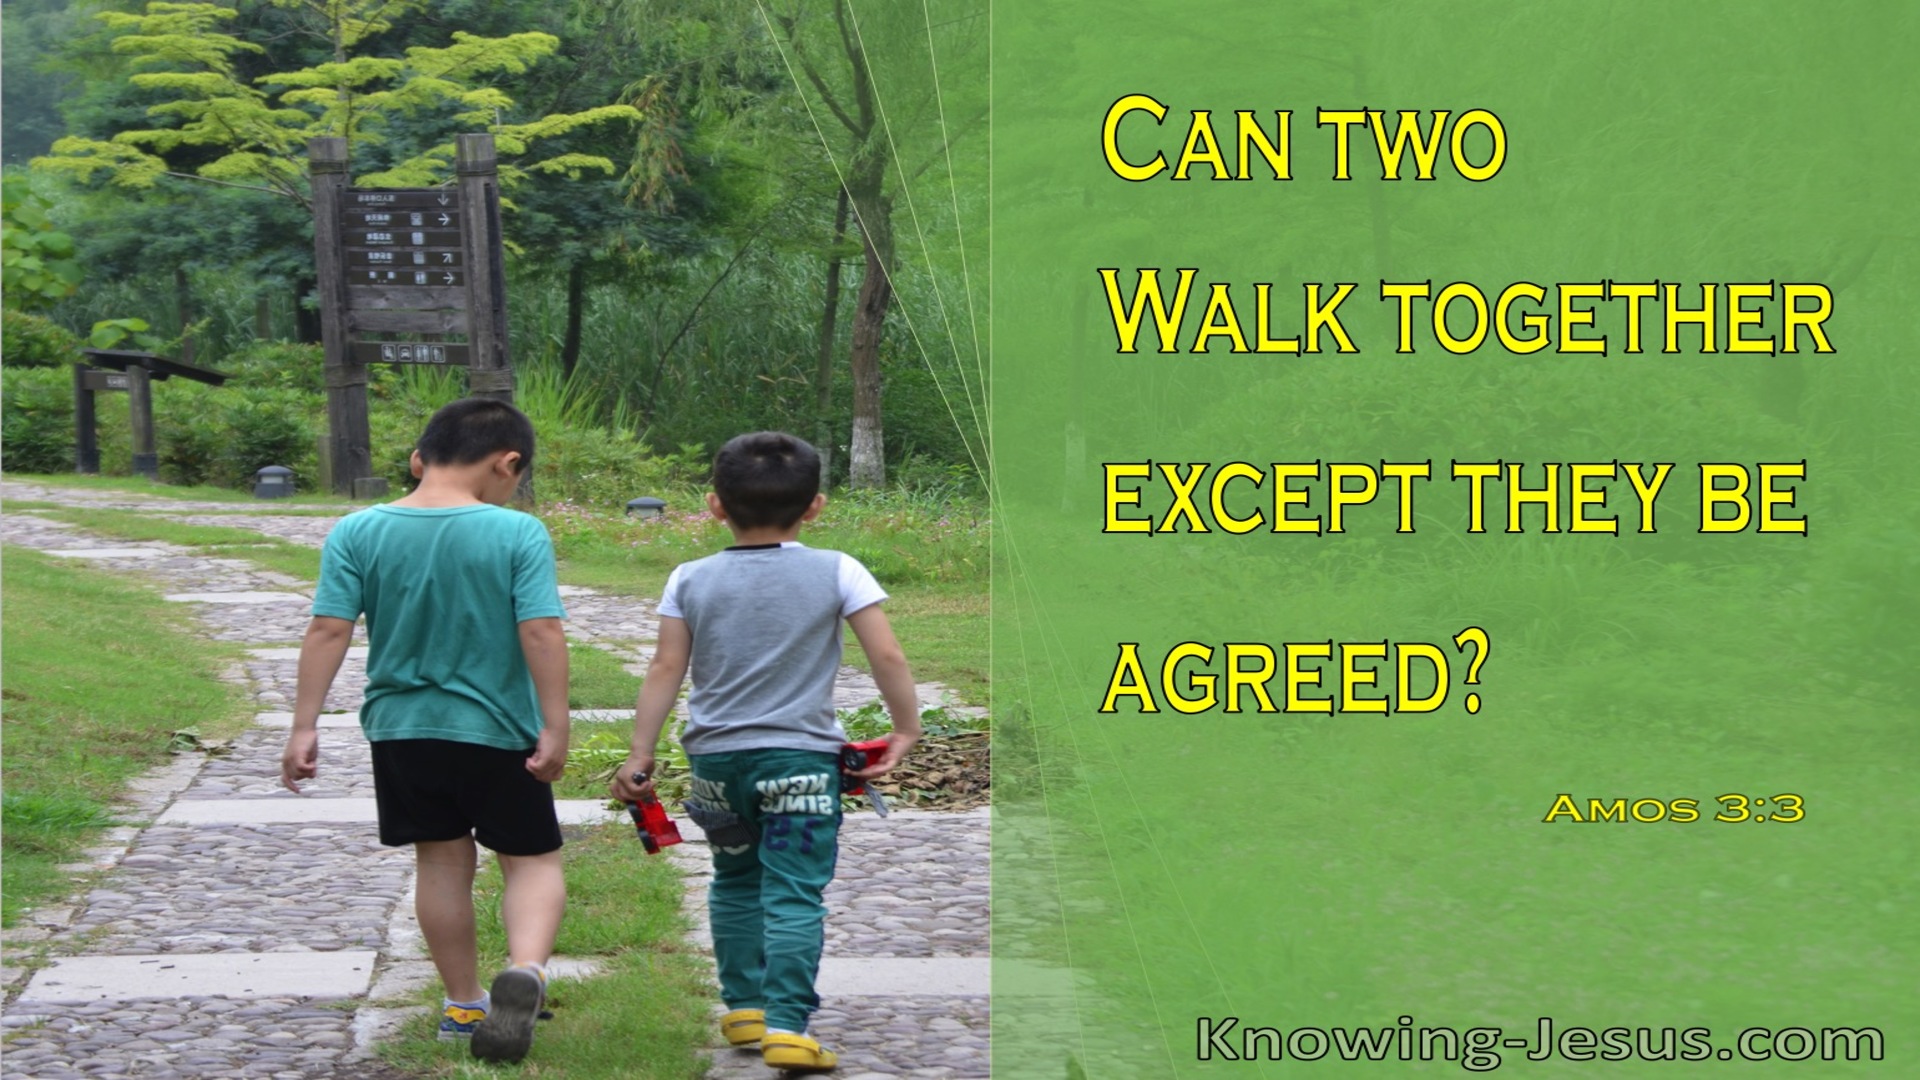 Amos 3:3 Walking Together (devotional)03:08 (green)